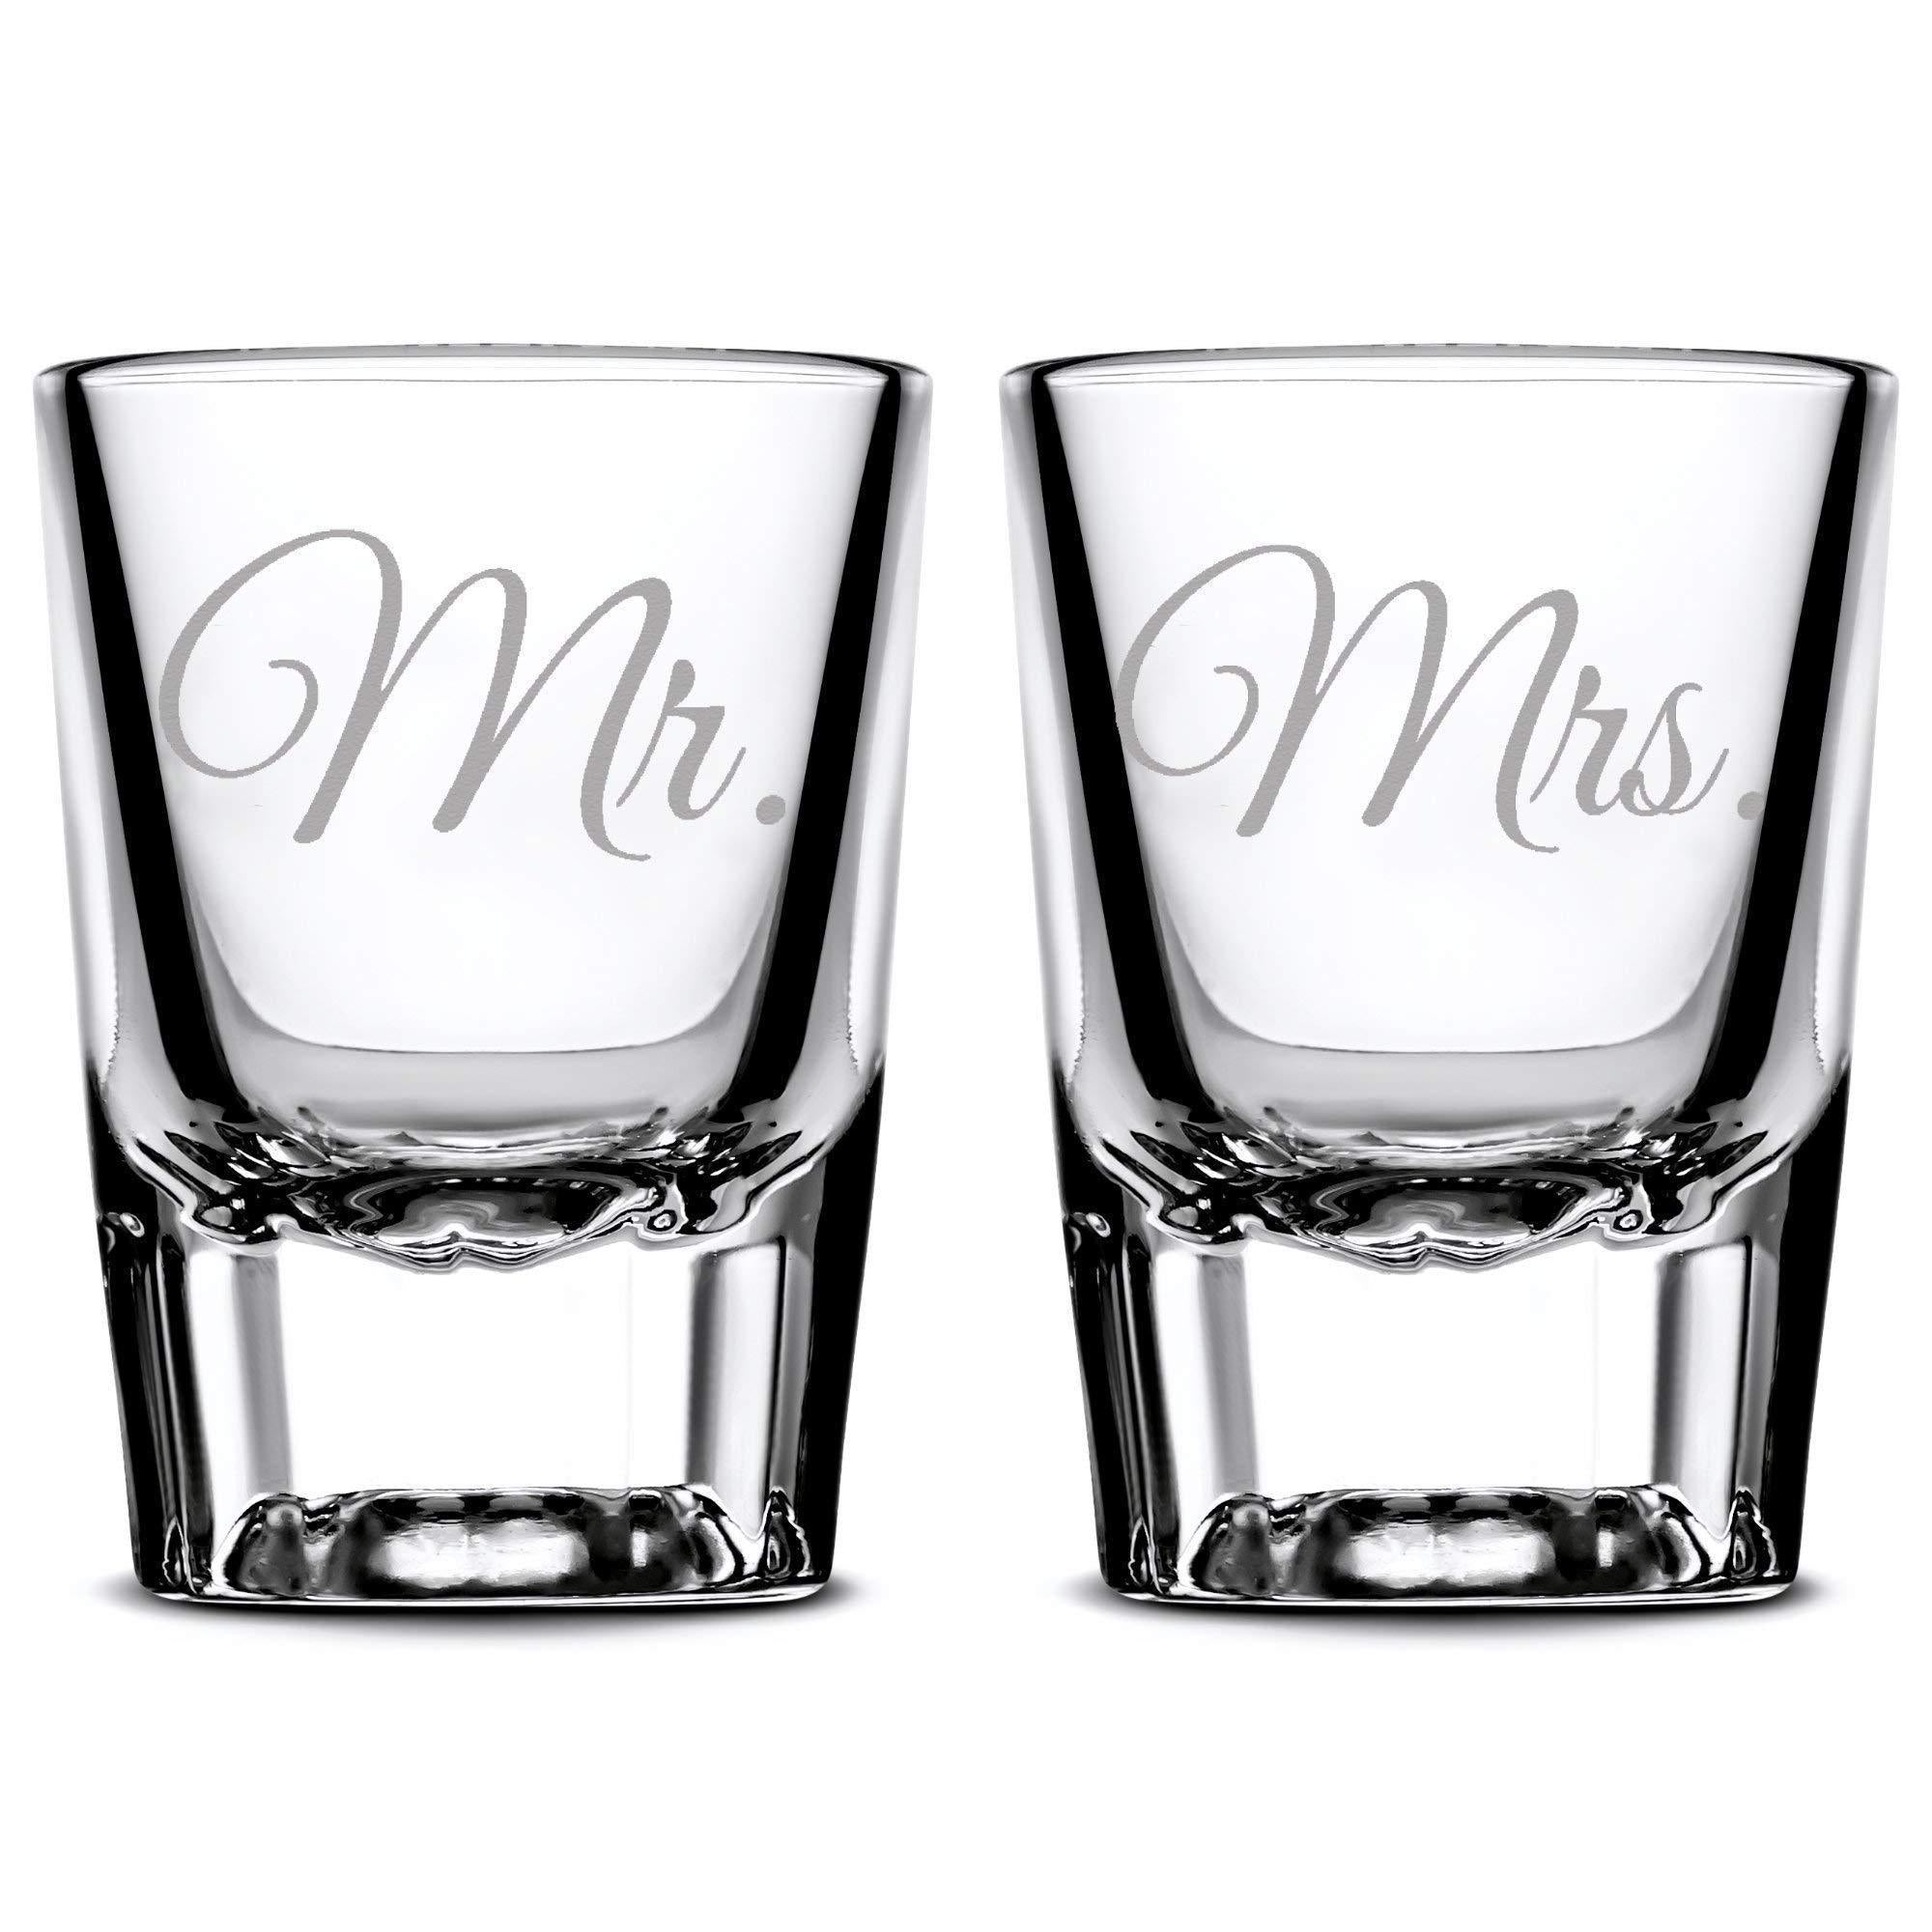 Premium Wedding Shot Glasses, Mr. and Mrs. Integrity Bottles